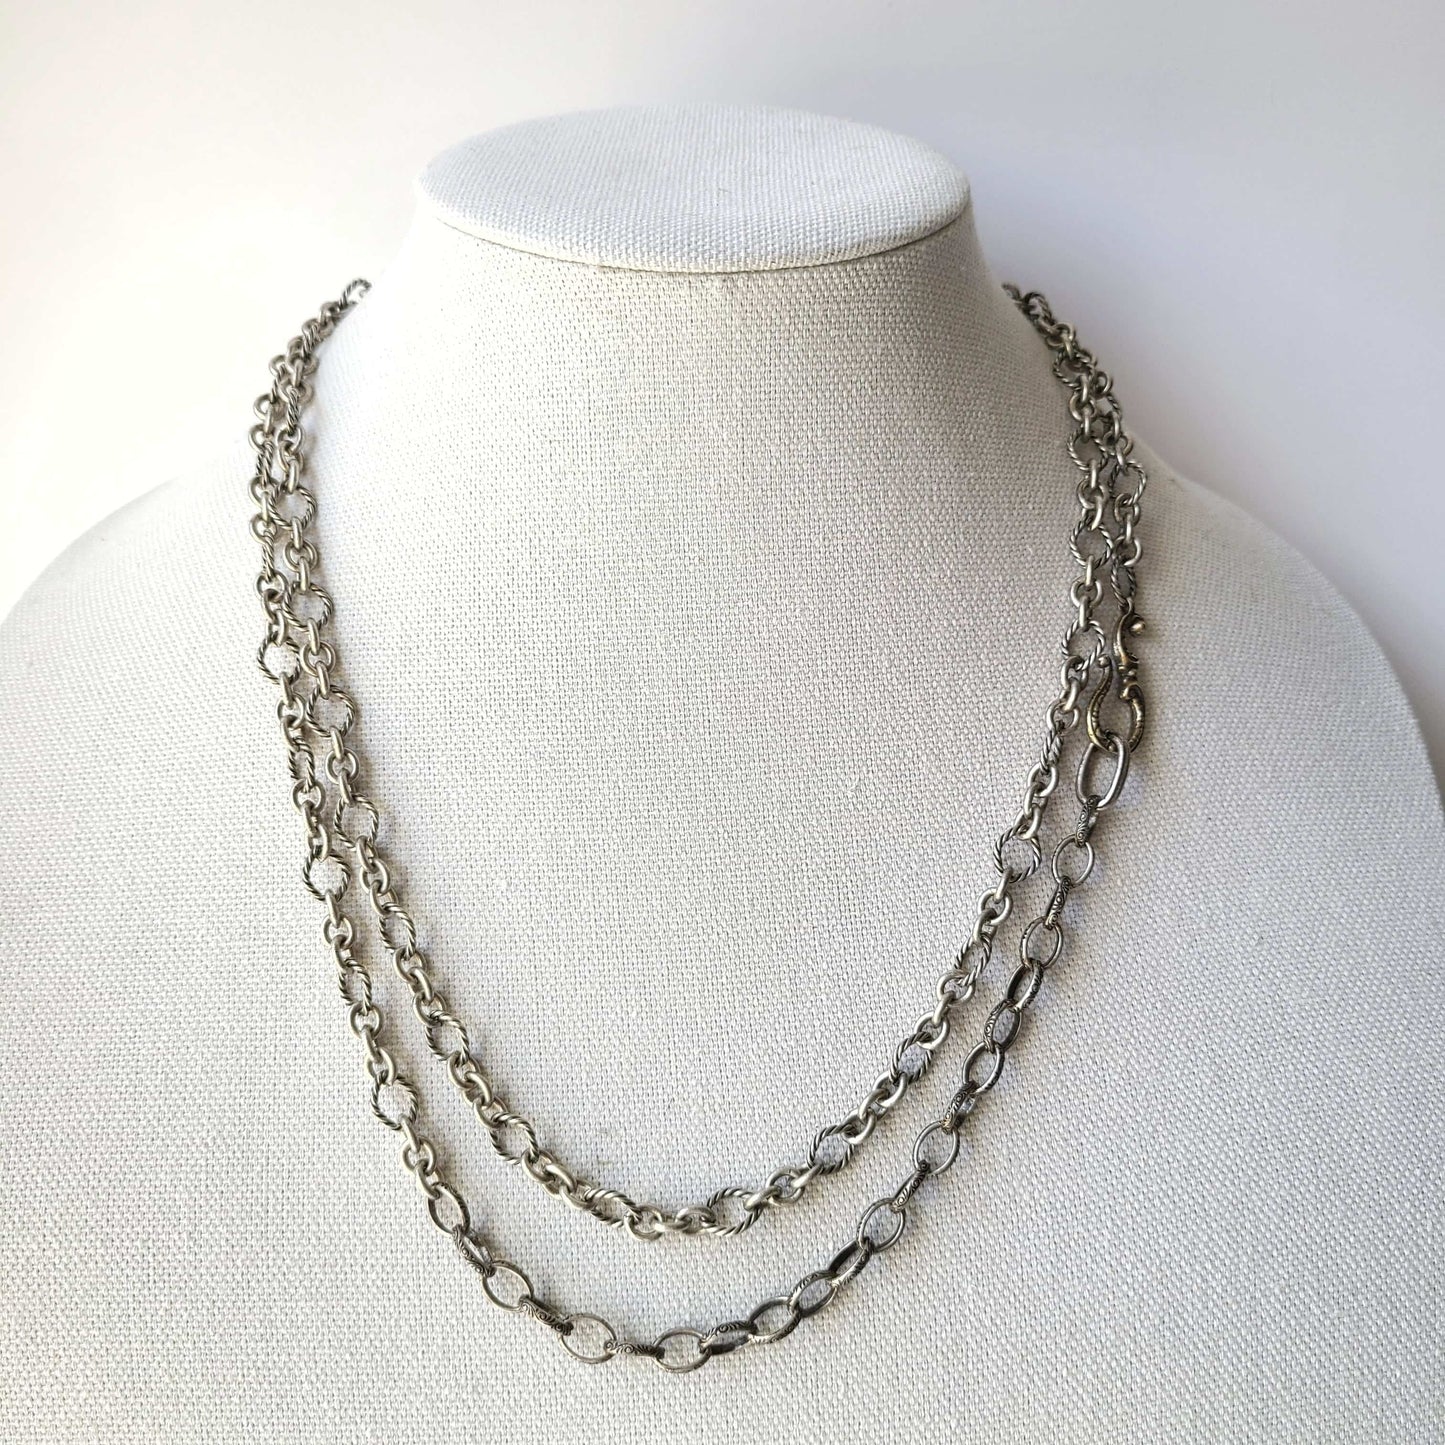 Multi wrap Georgian hook necklace - Michelle Rhodes